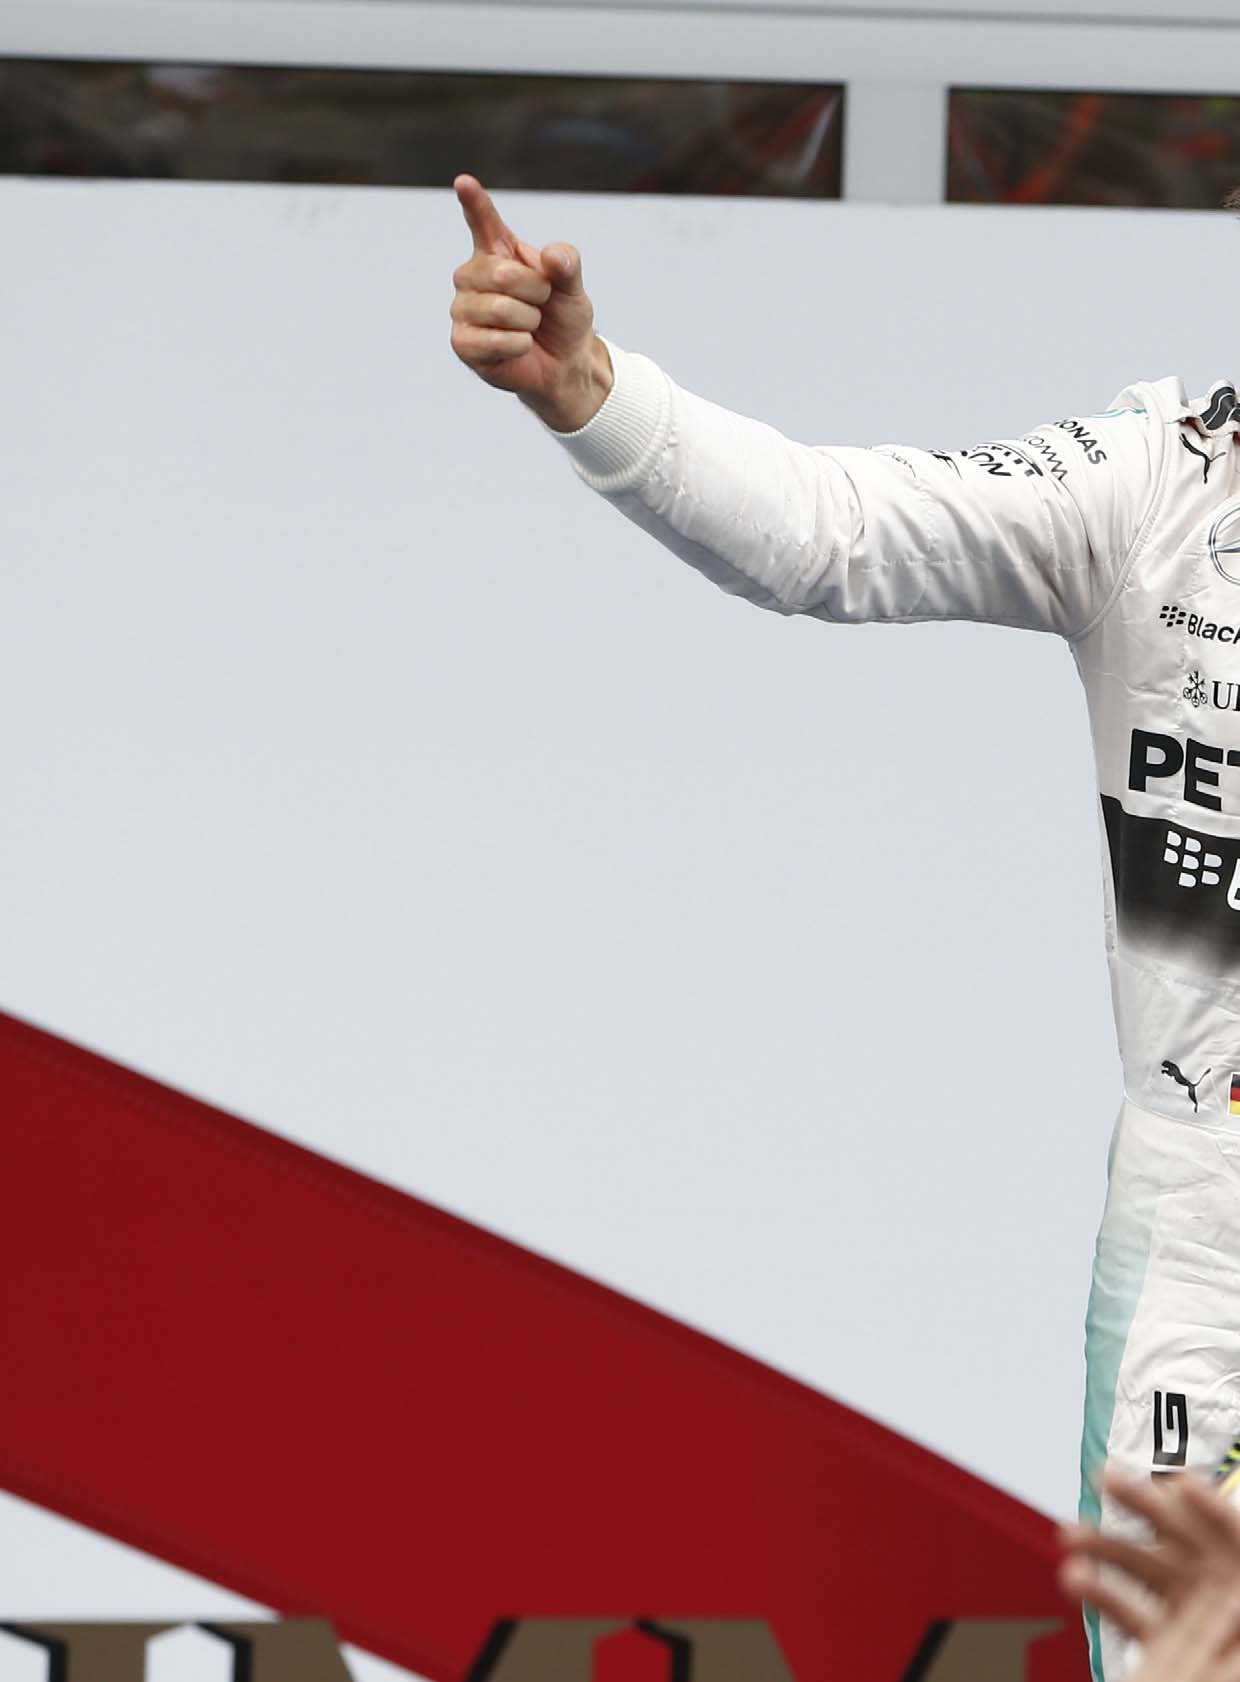 FORMULA GP AUSTRIA1 Stoffel Mercedes Vandoorne Momento Rosberg Il